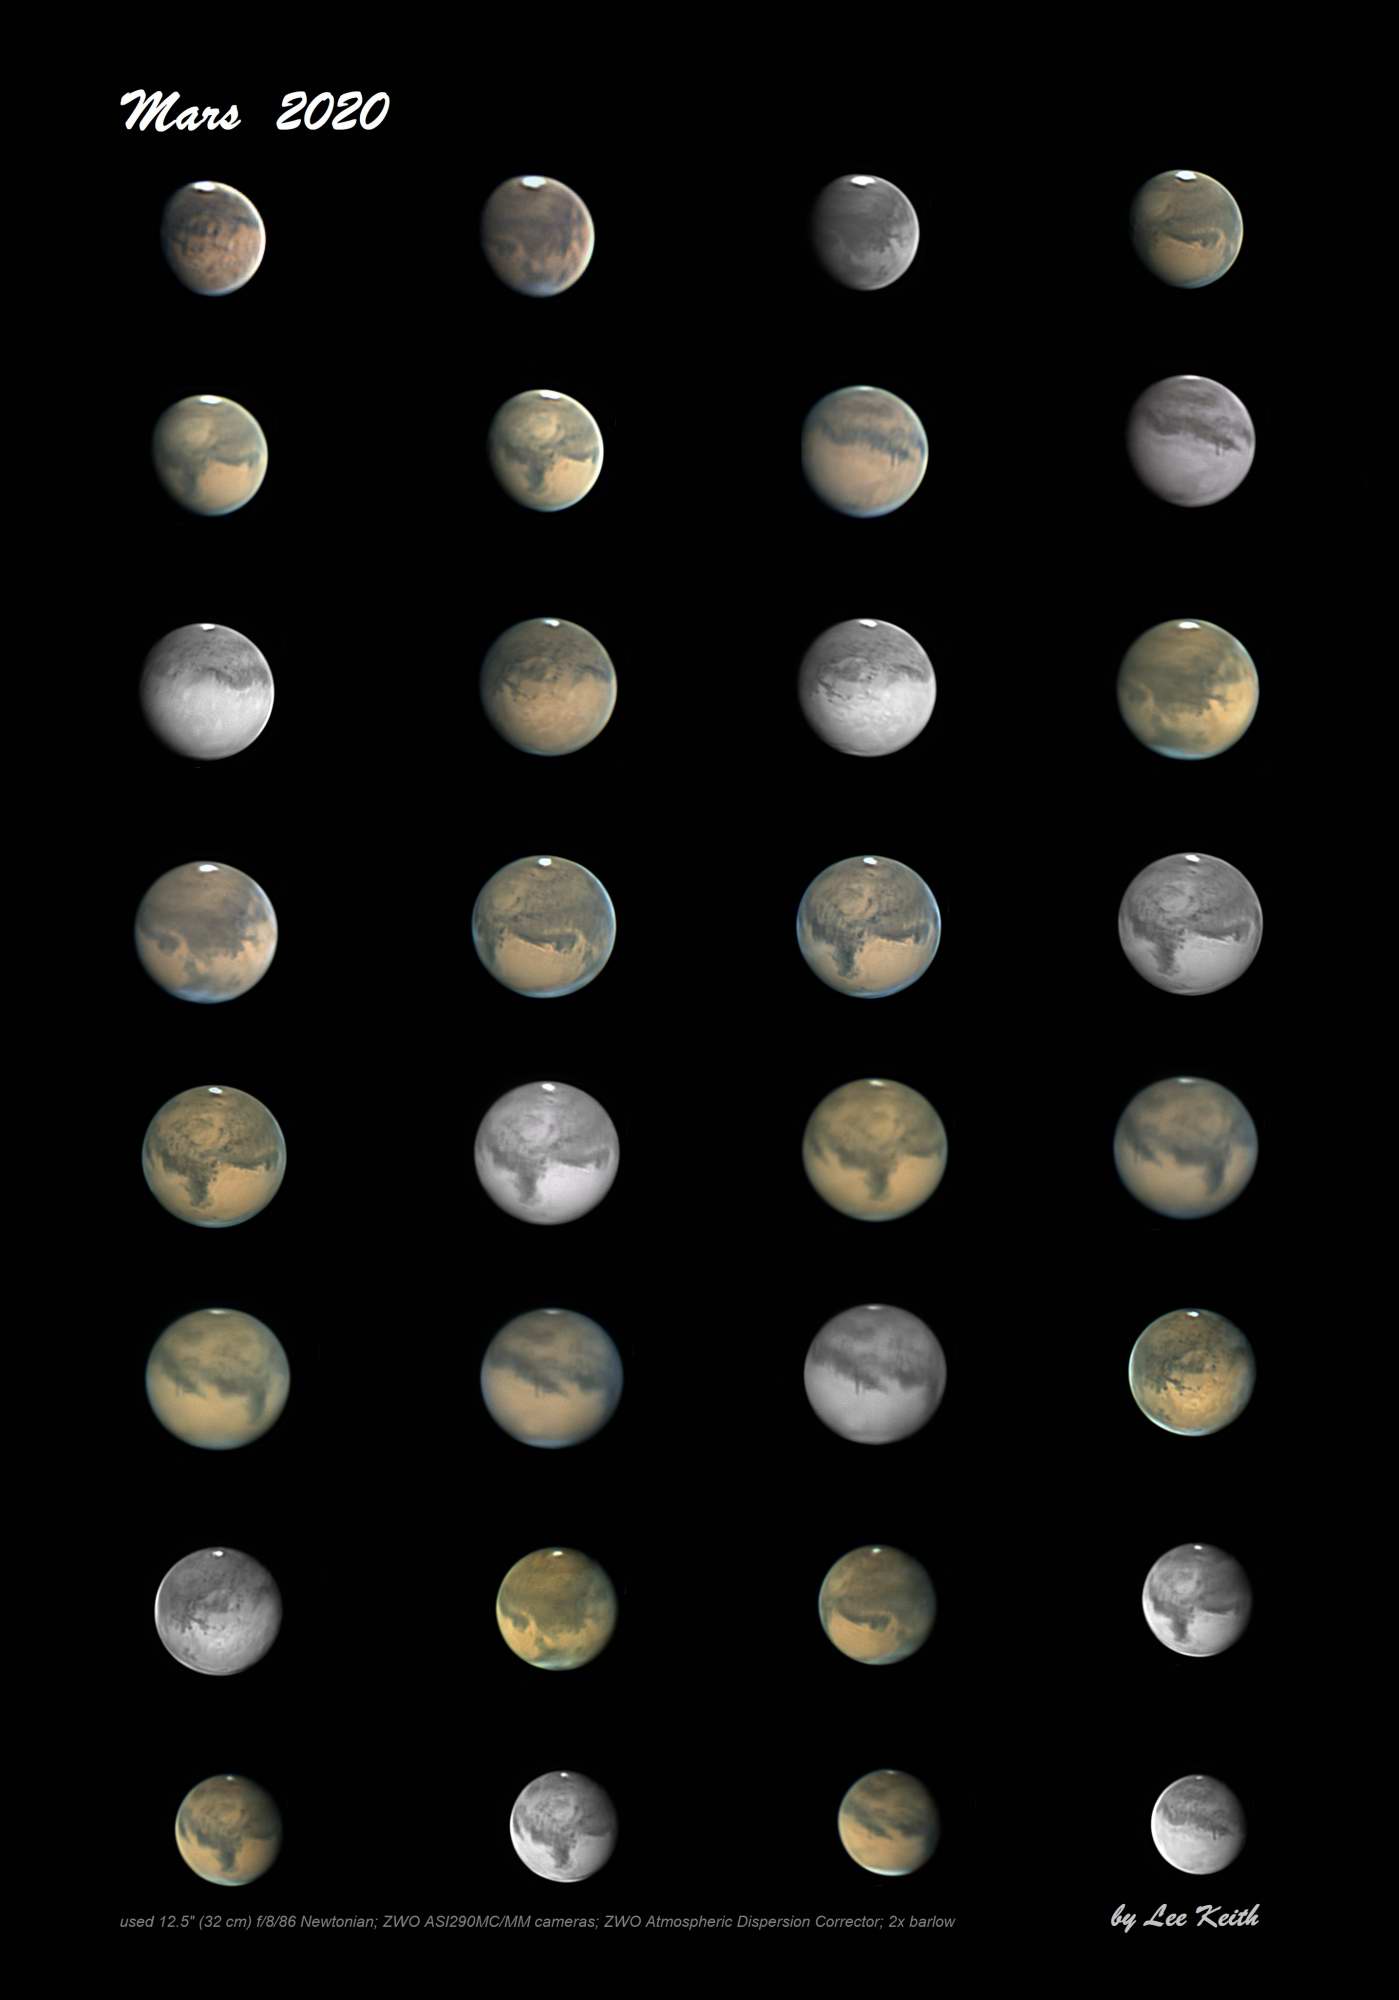 Mars Collage - 2020